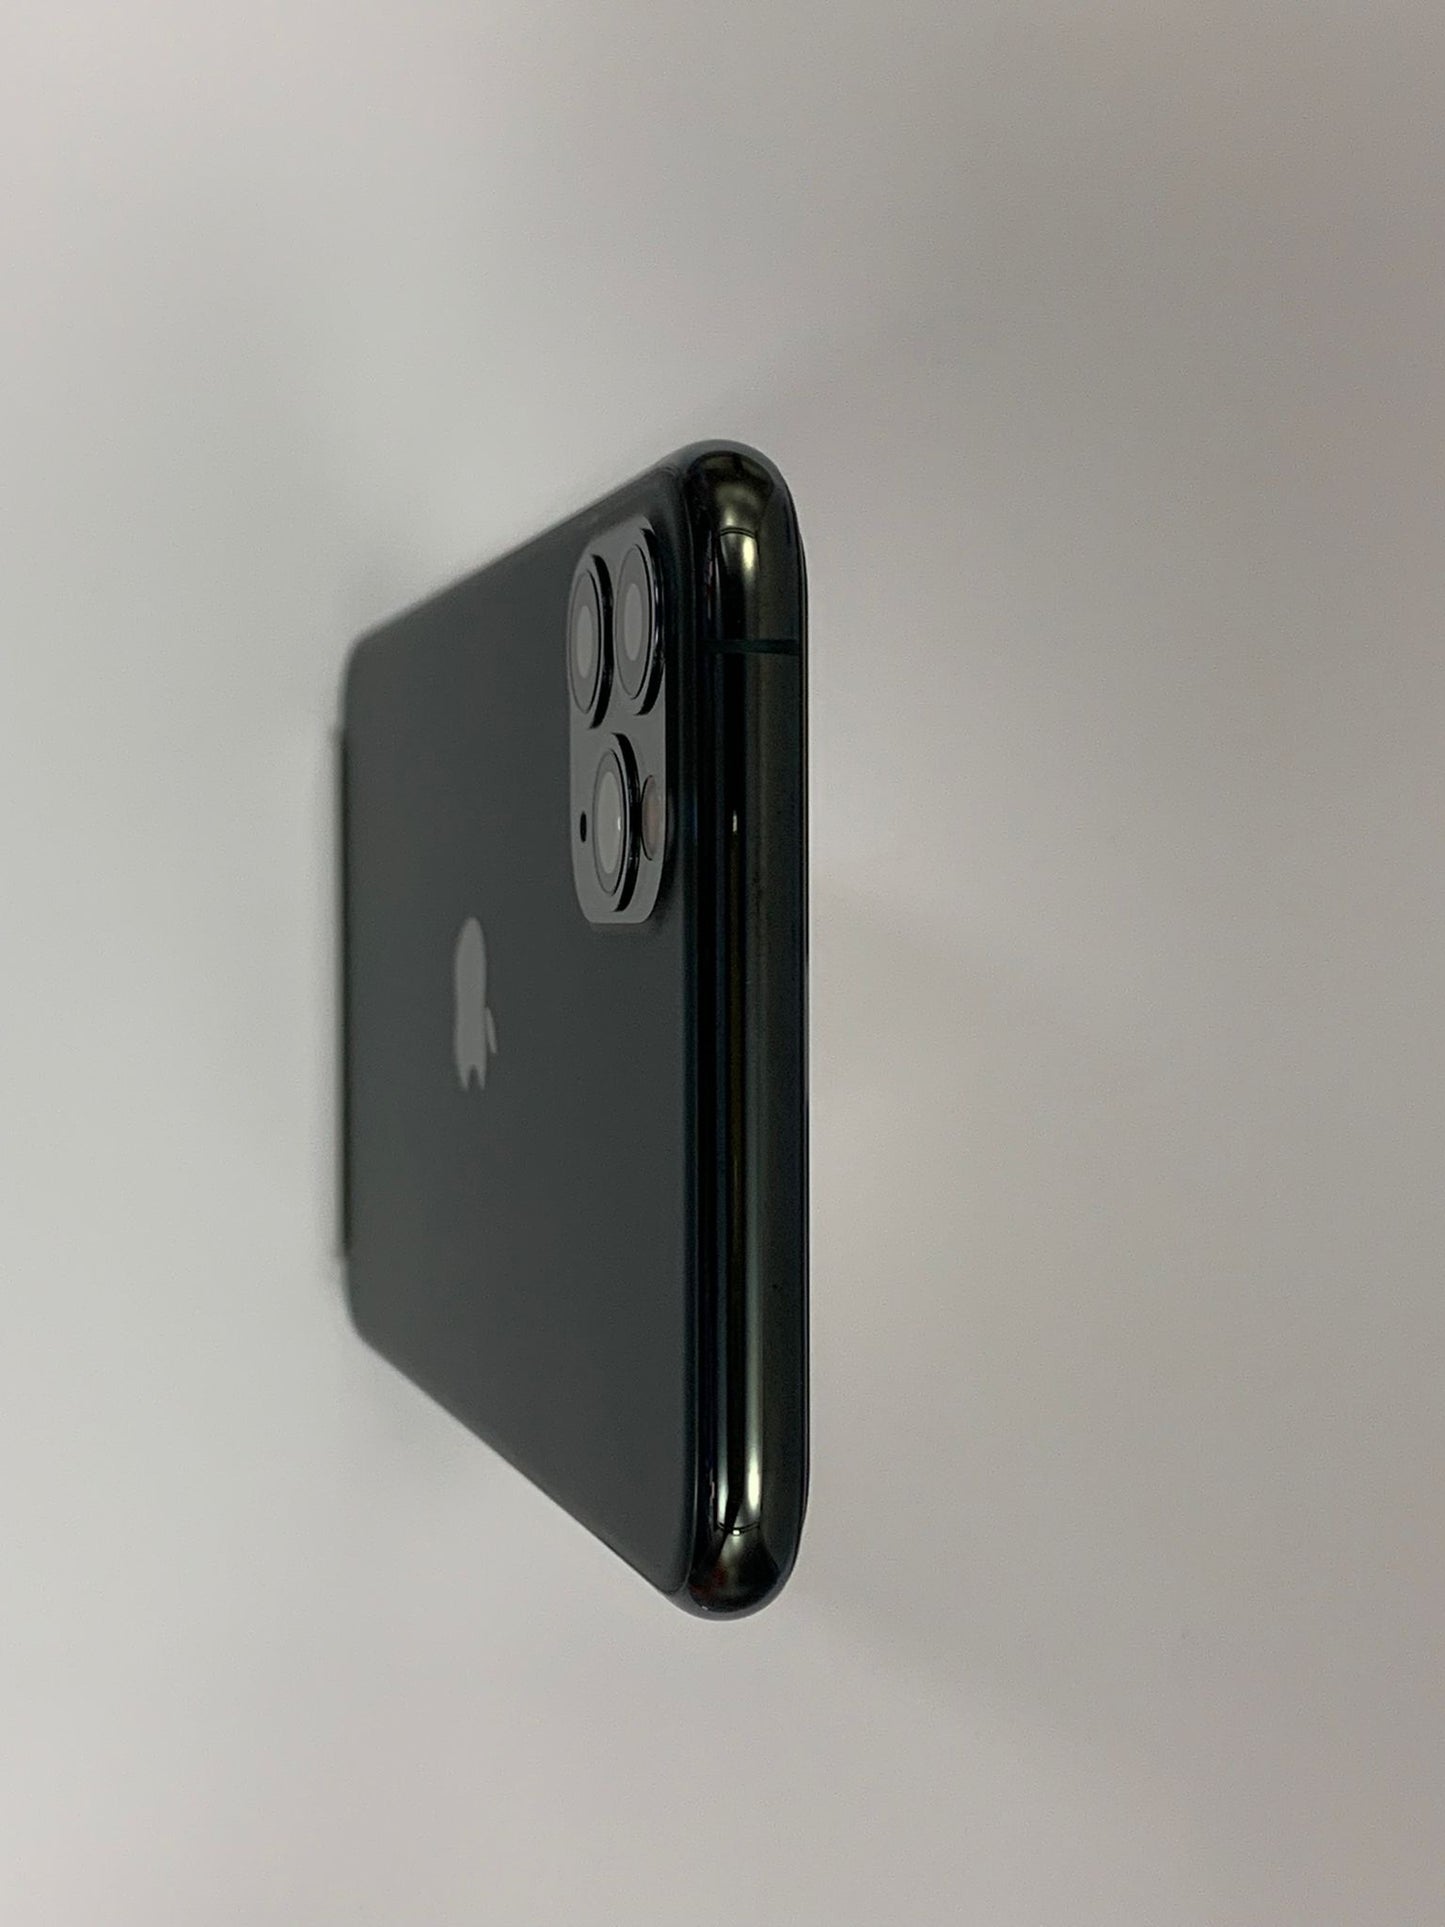 Apple iPhone 11 Pro Max 512GB (Used)